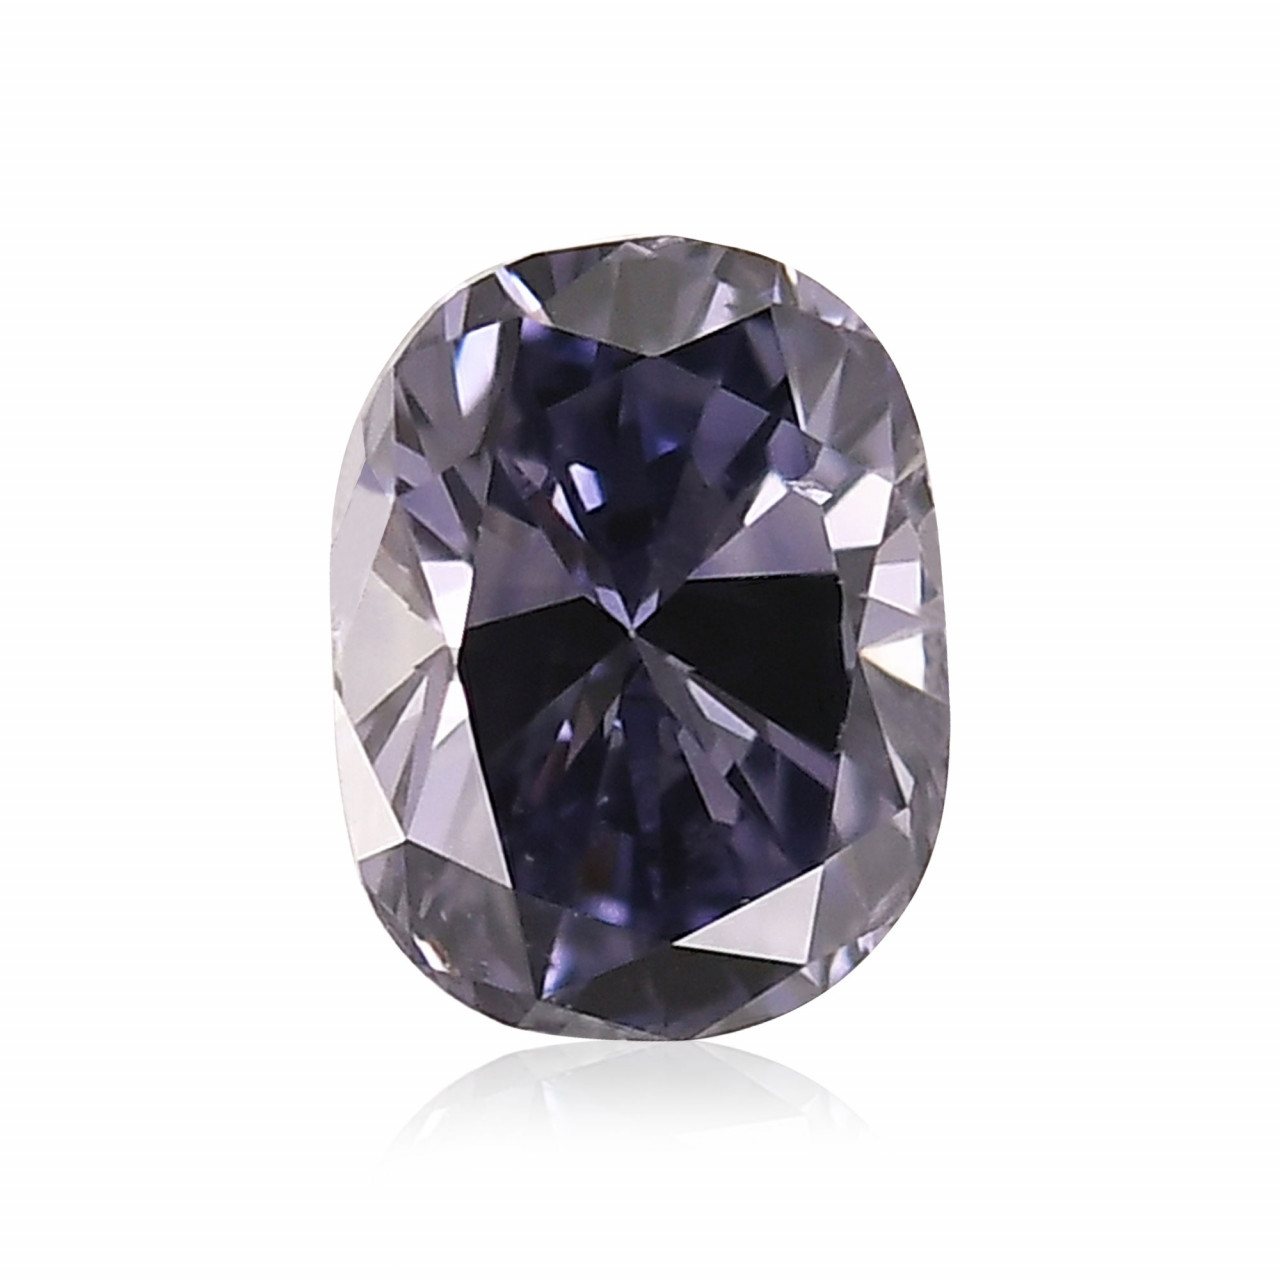 0.30 carat, Fancy Dark Gray Violet Diamond, Cushion Shape, SI1 